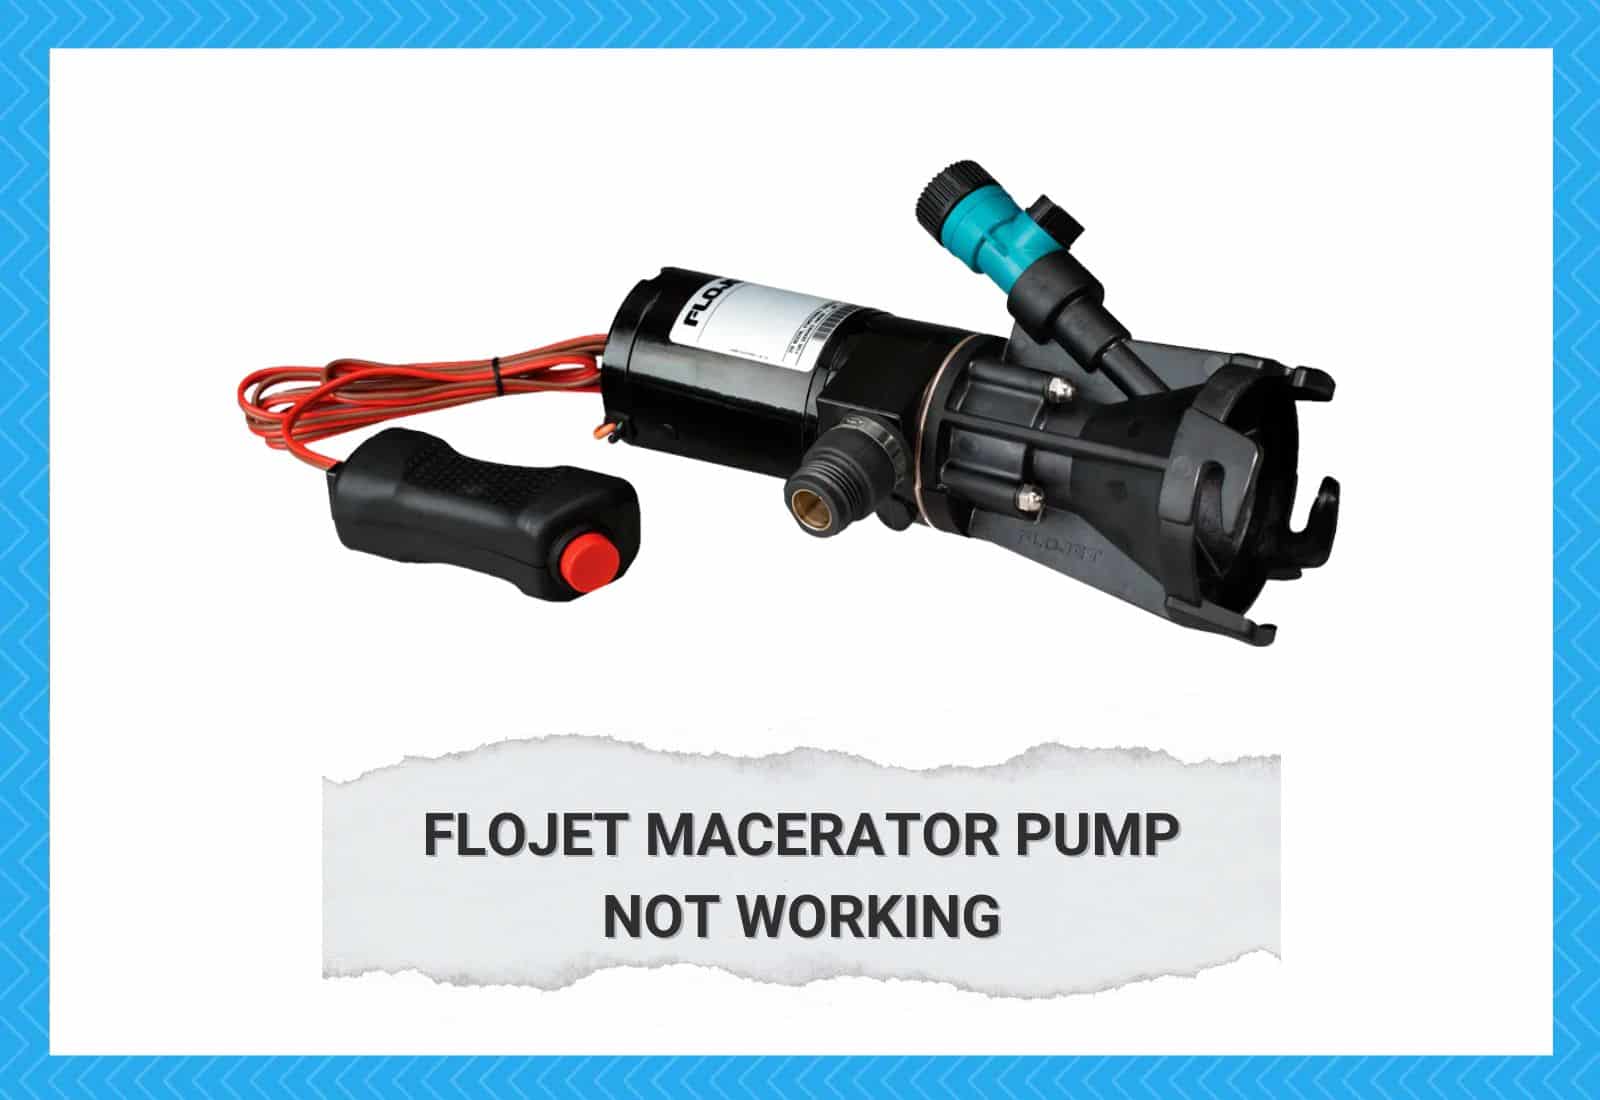 Flojet Macerator Pump Not Working